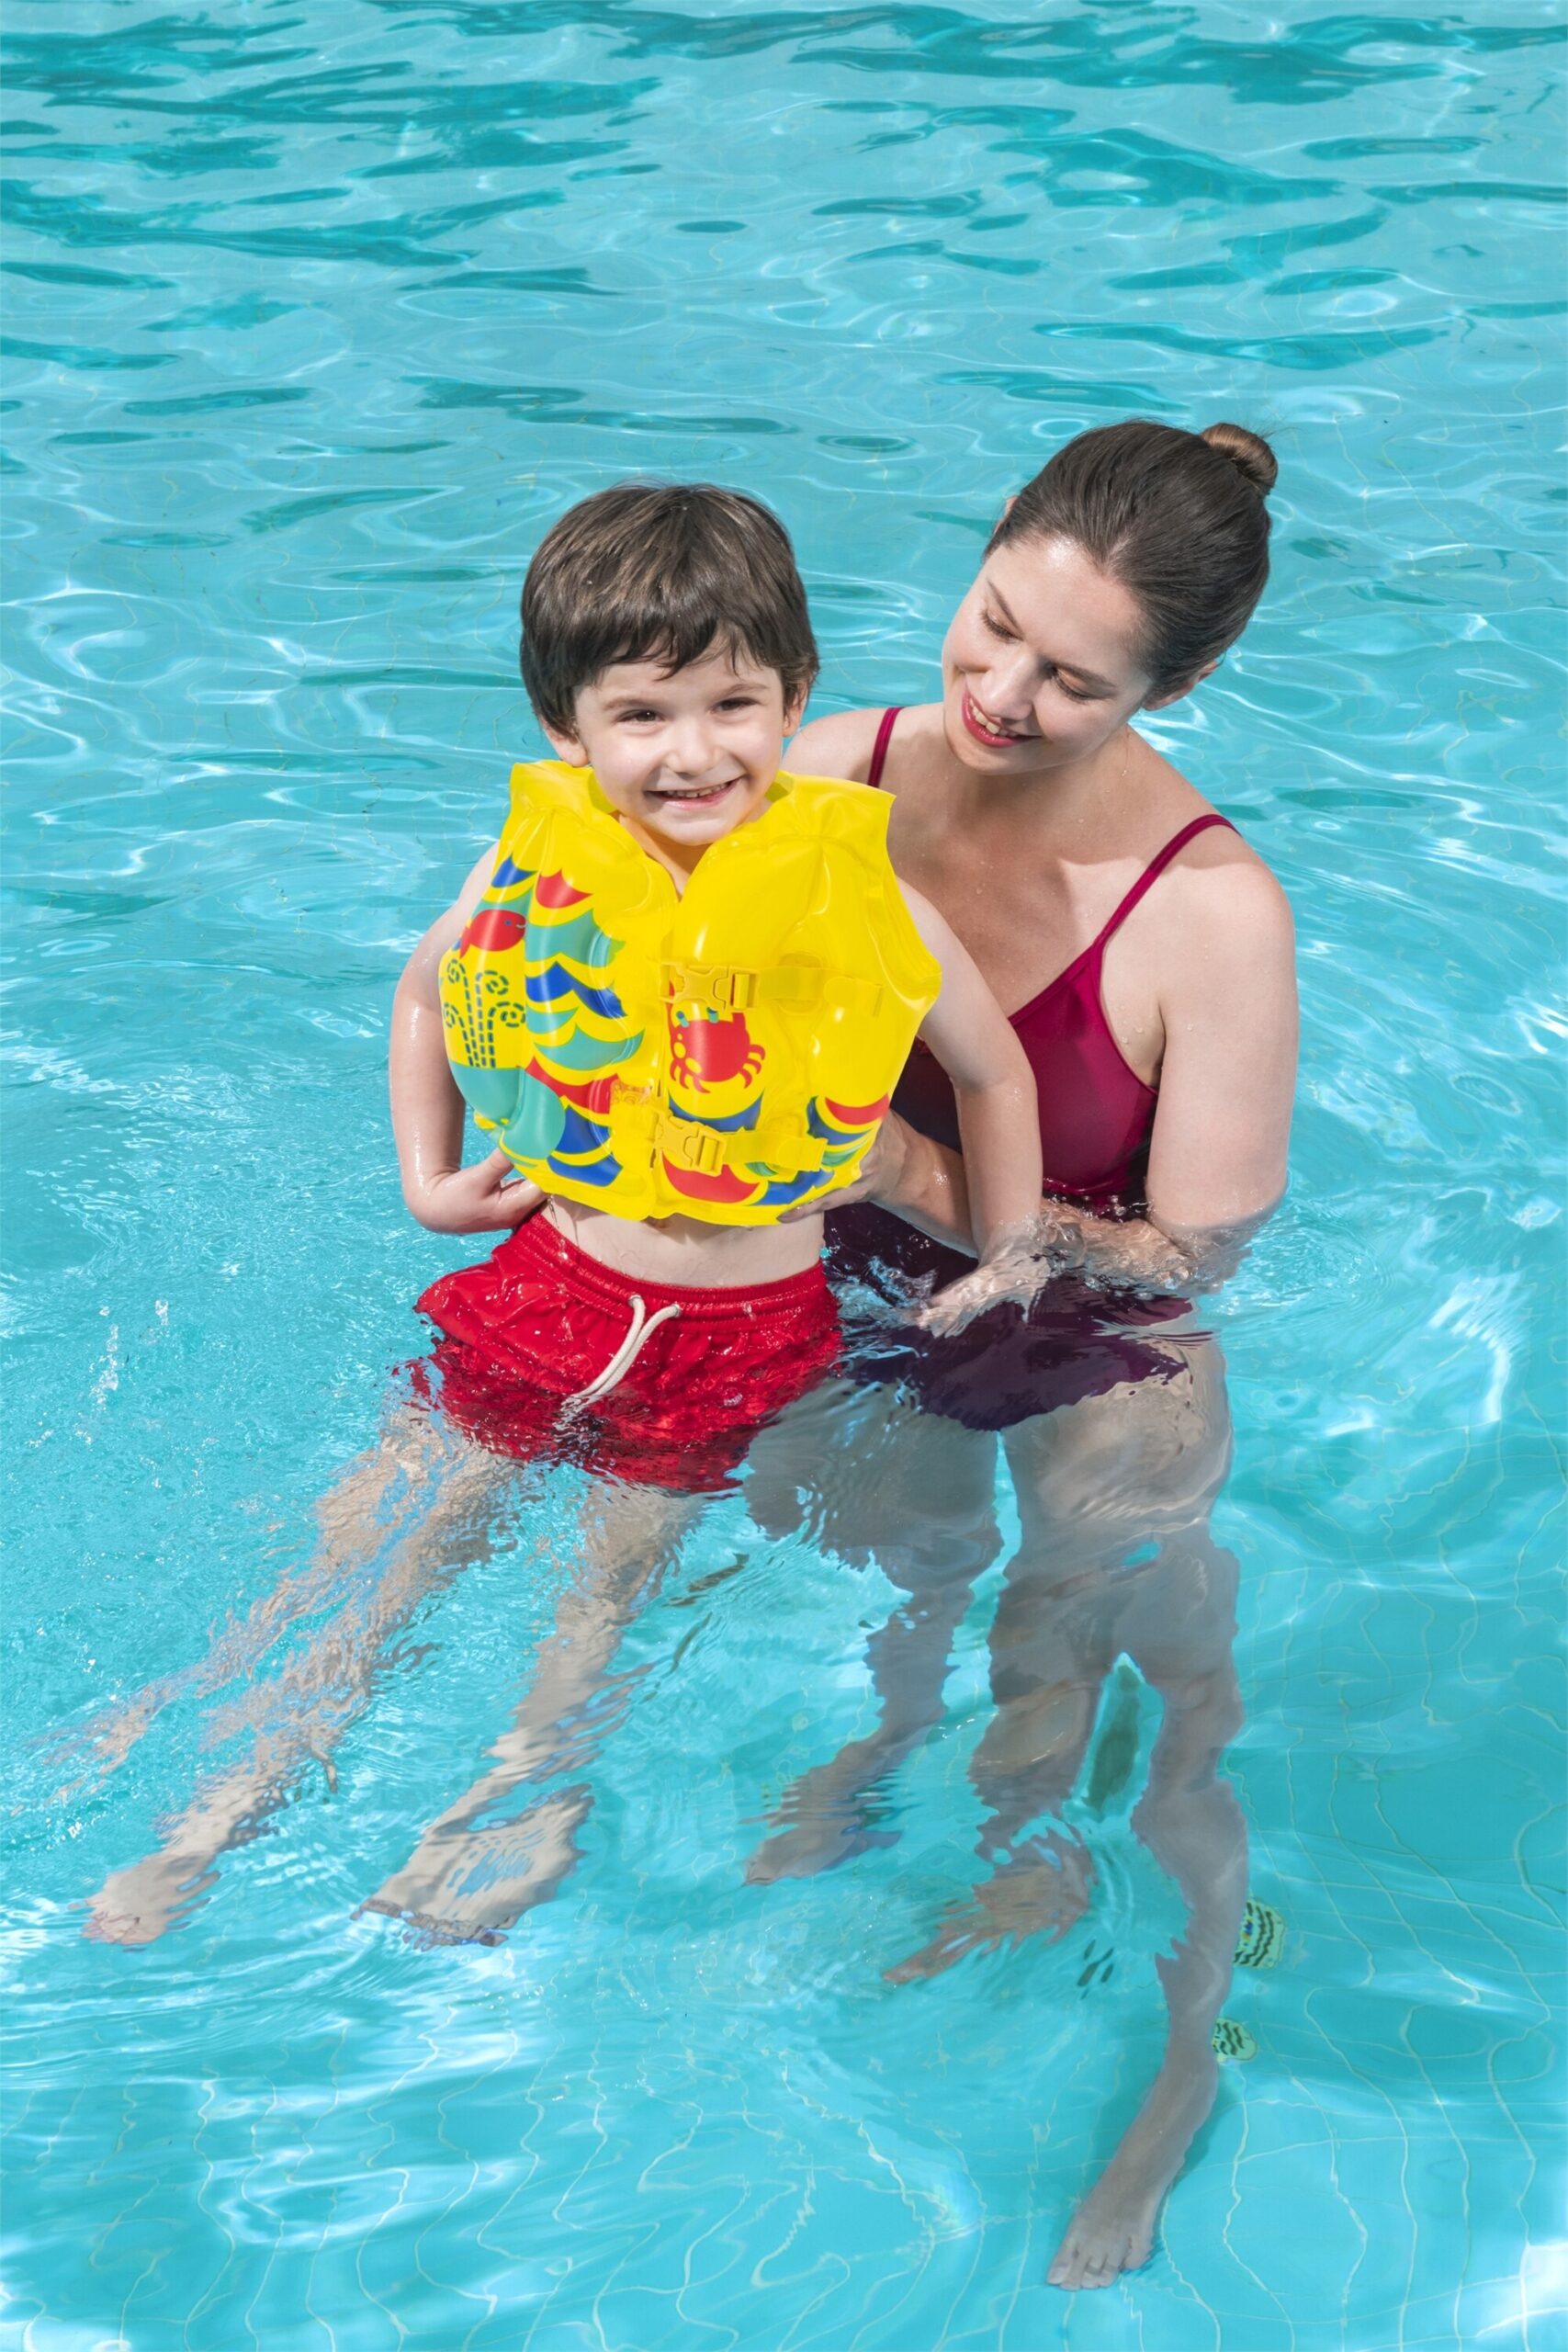 Giubbino da nuoto gonfiabile bestway® bermudabay™, accessori nuoto, 3-6 anni - Bestway